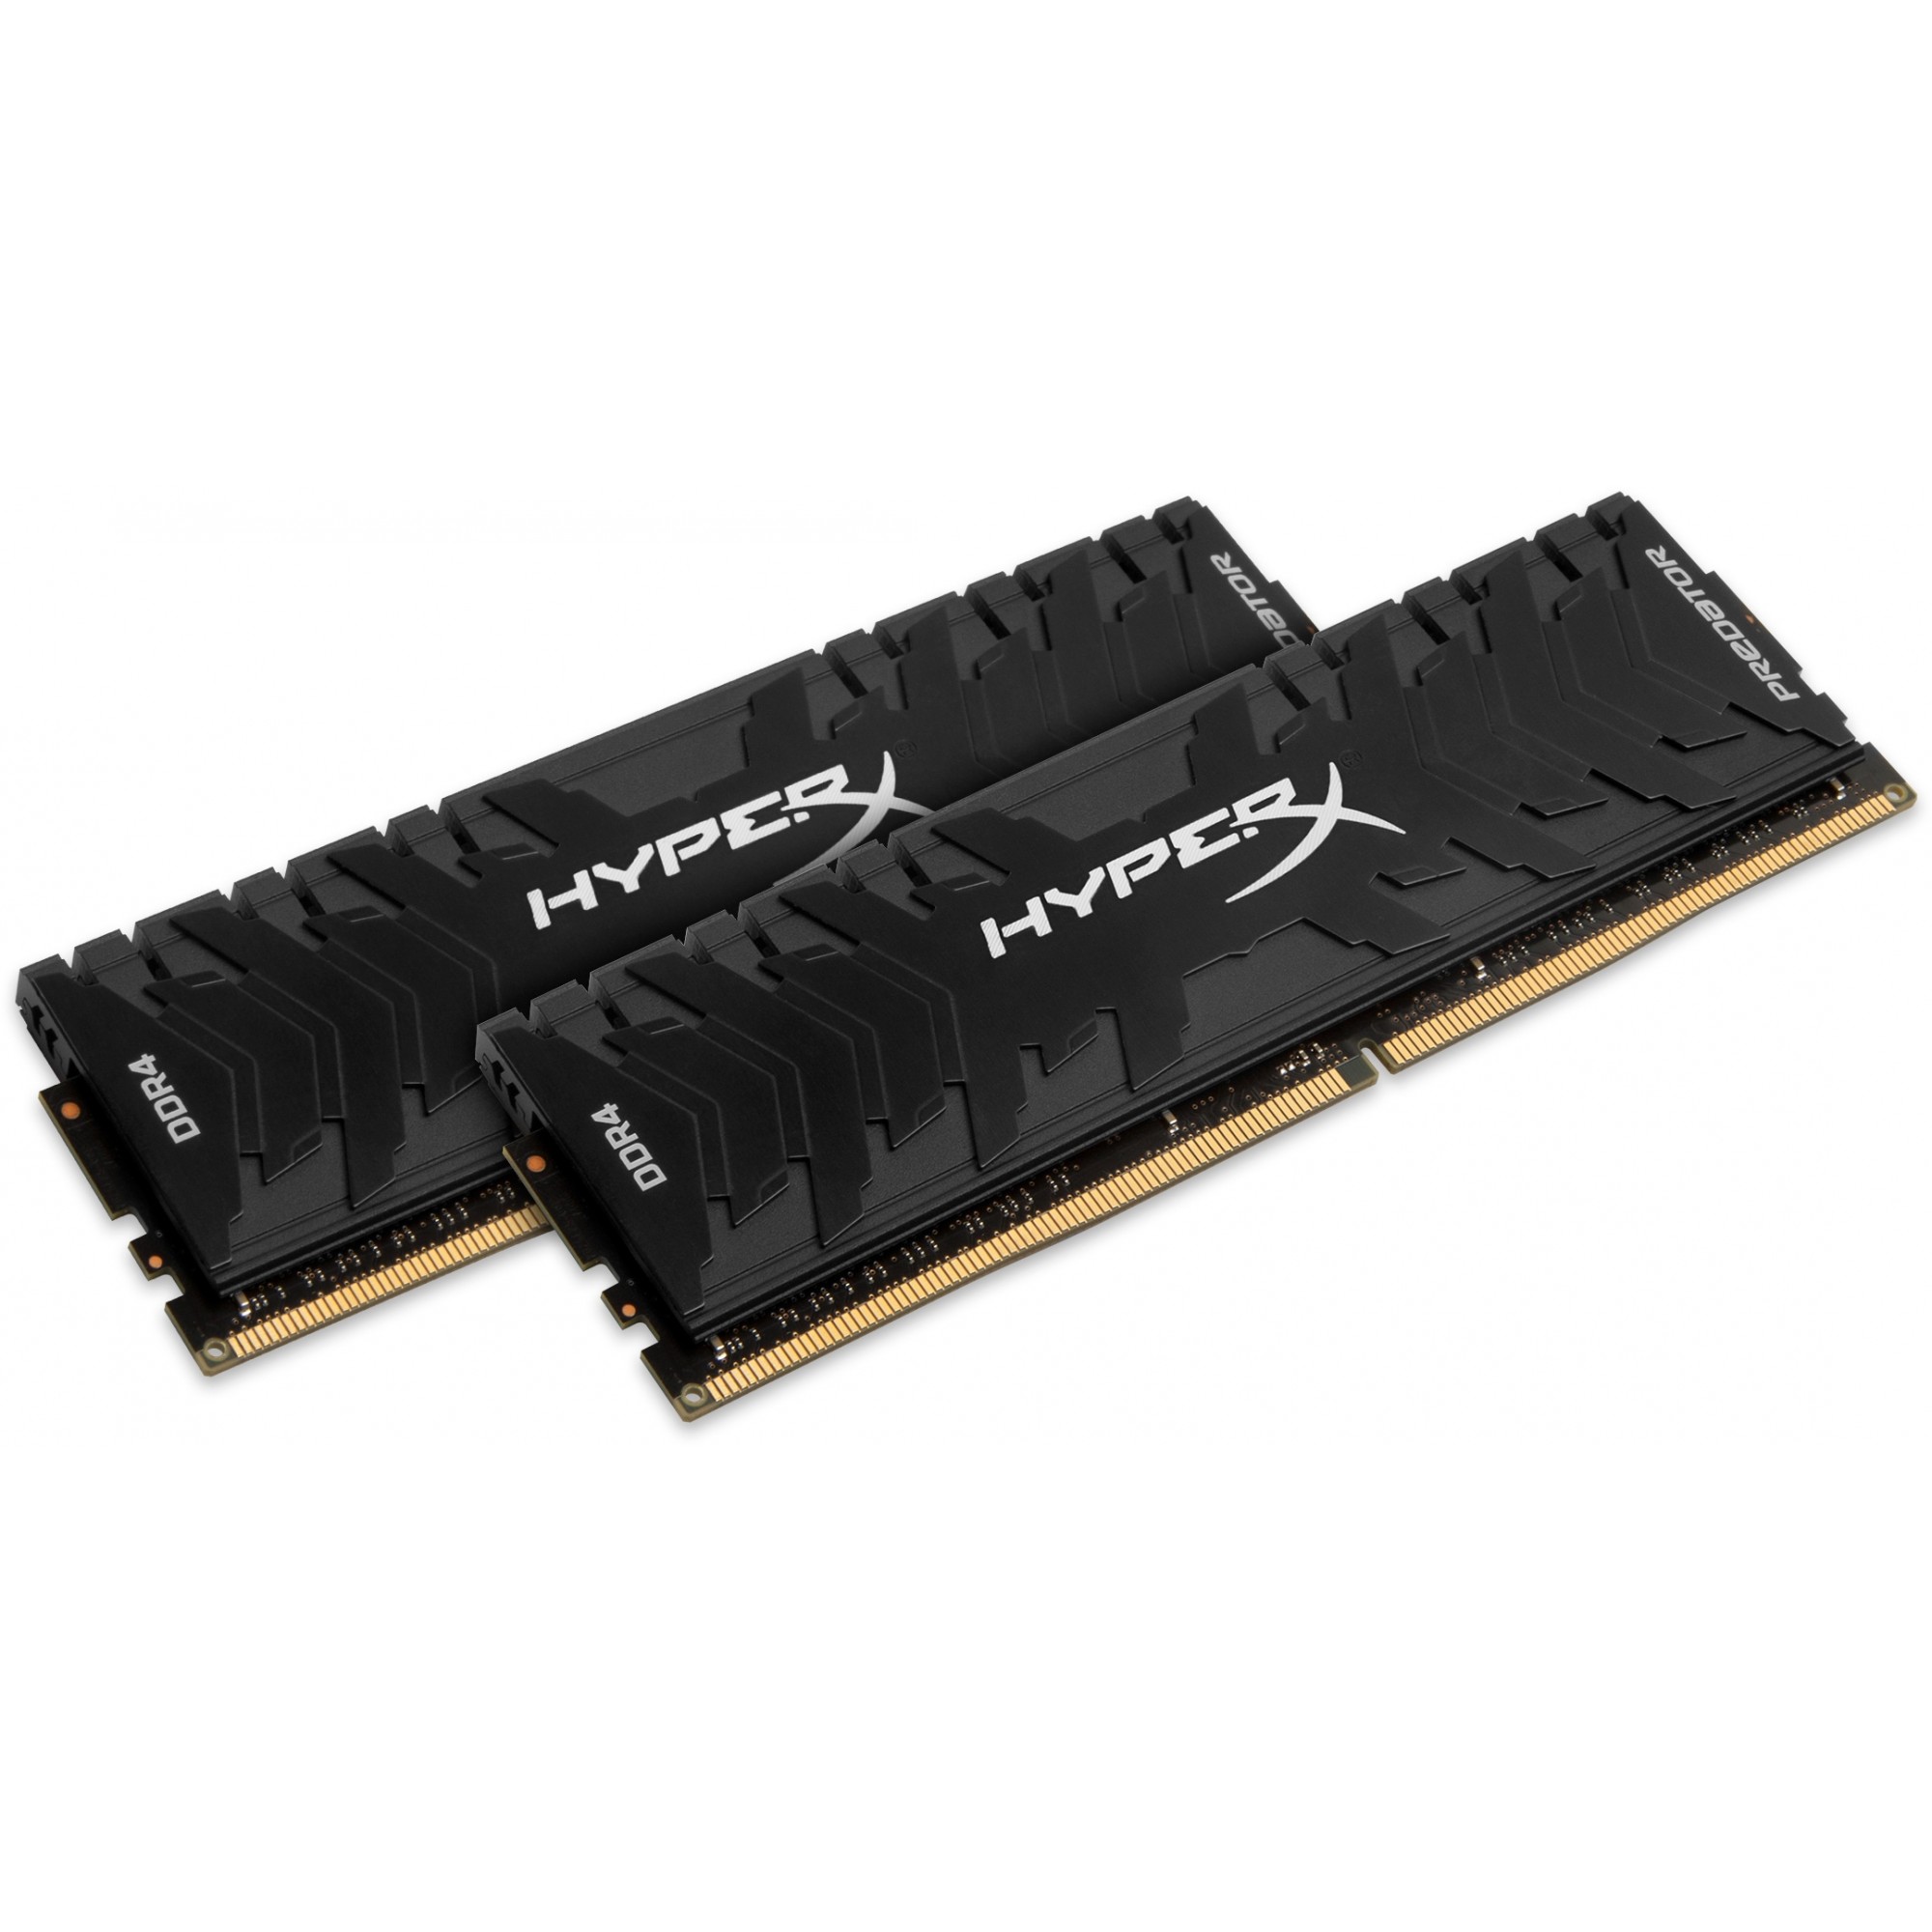 HyperX 16 GB (2x8GB) DDR4 2400 MHz Predator (HX424C12PB3K2/16) - зображення 1